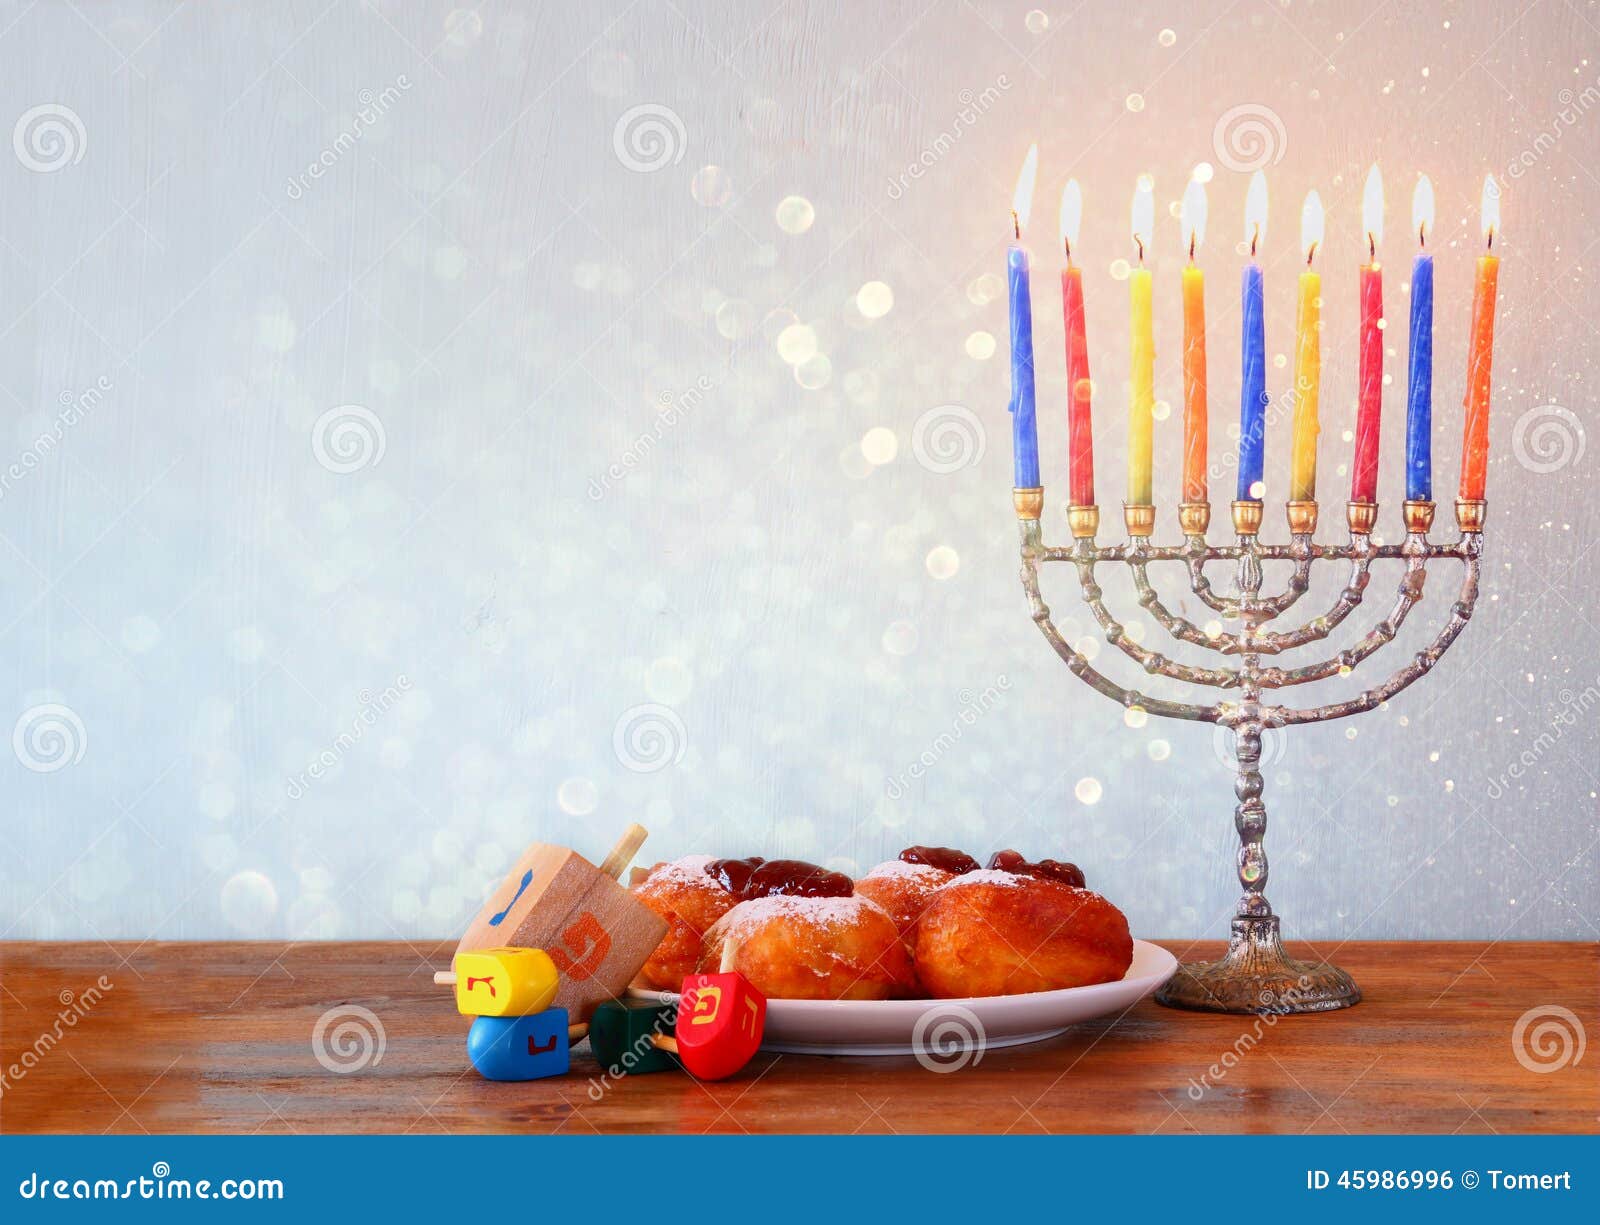 jewish holiday hanukkah with menorah, doughnuts over wooden table. retro filtered image